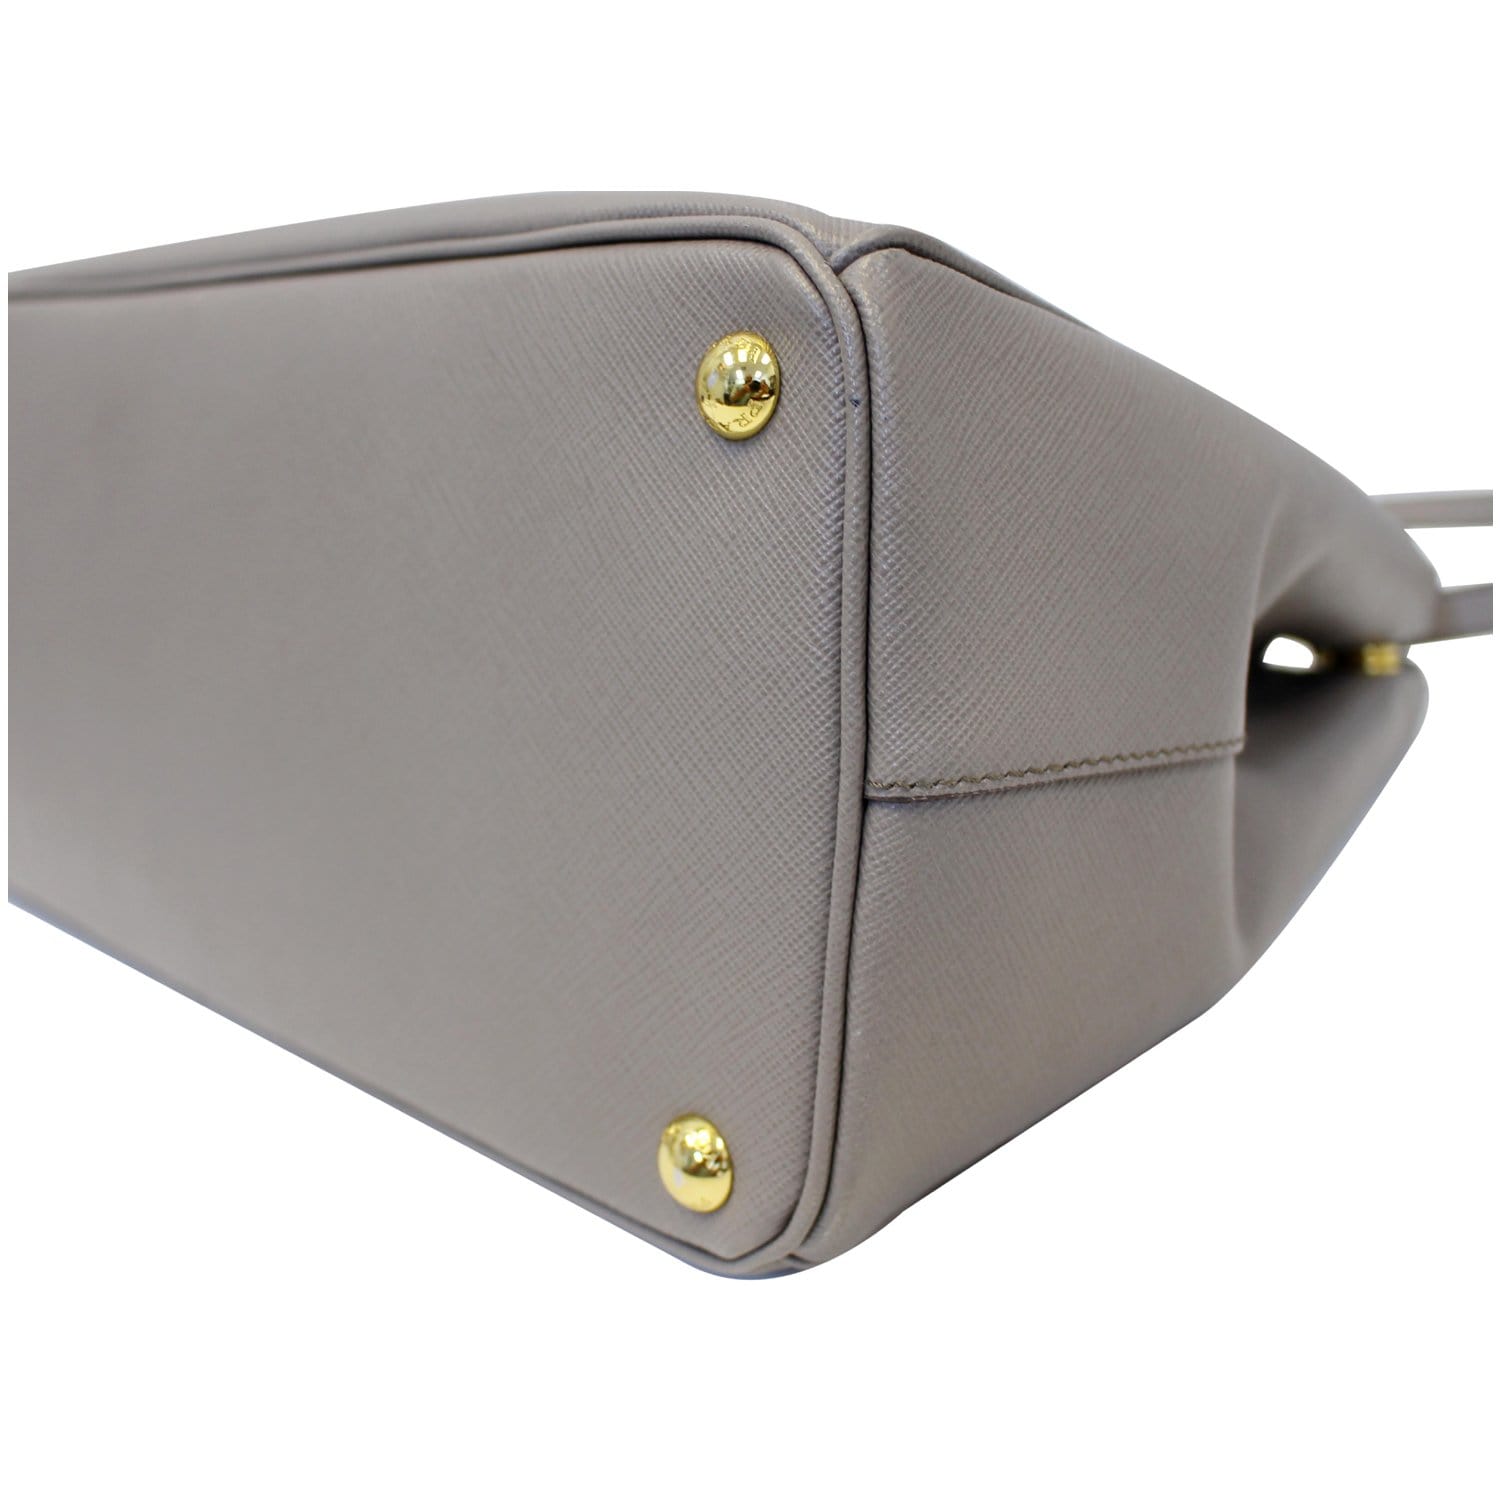 Prada - Women's Double Saffiano Mini Bag Satchel - Gray - Leather